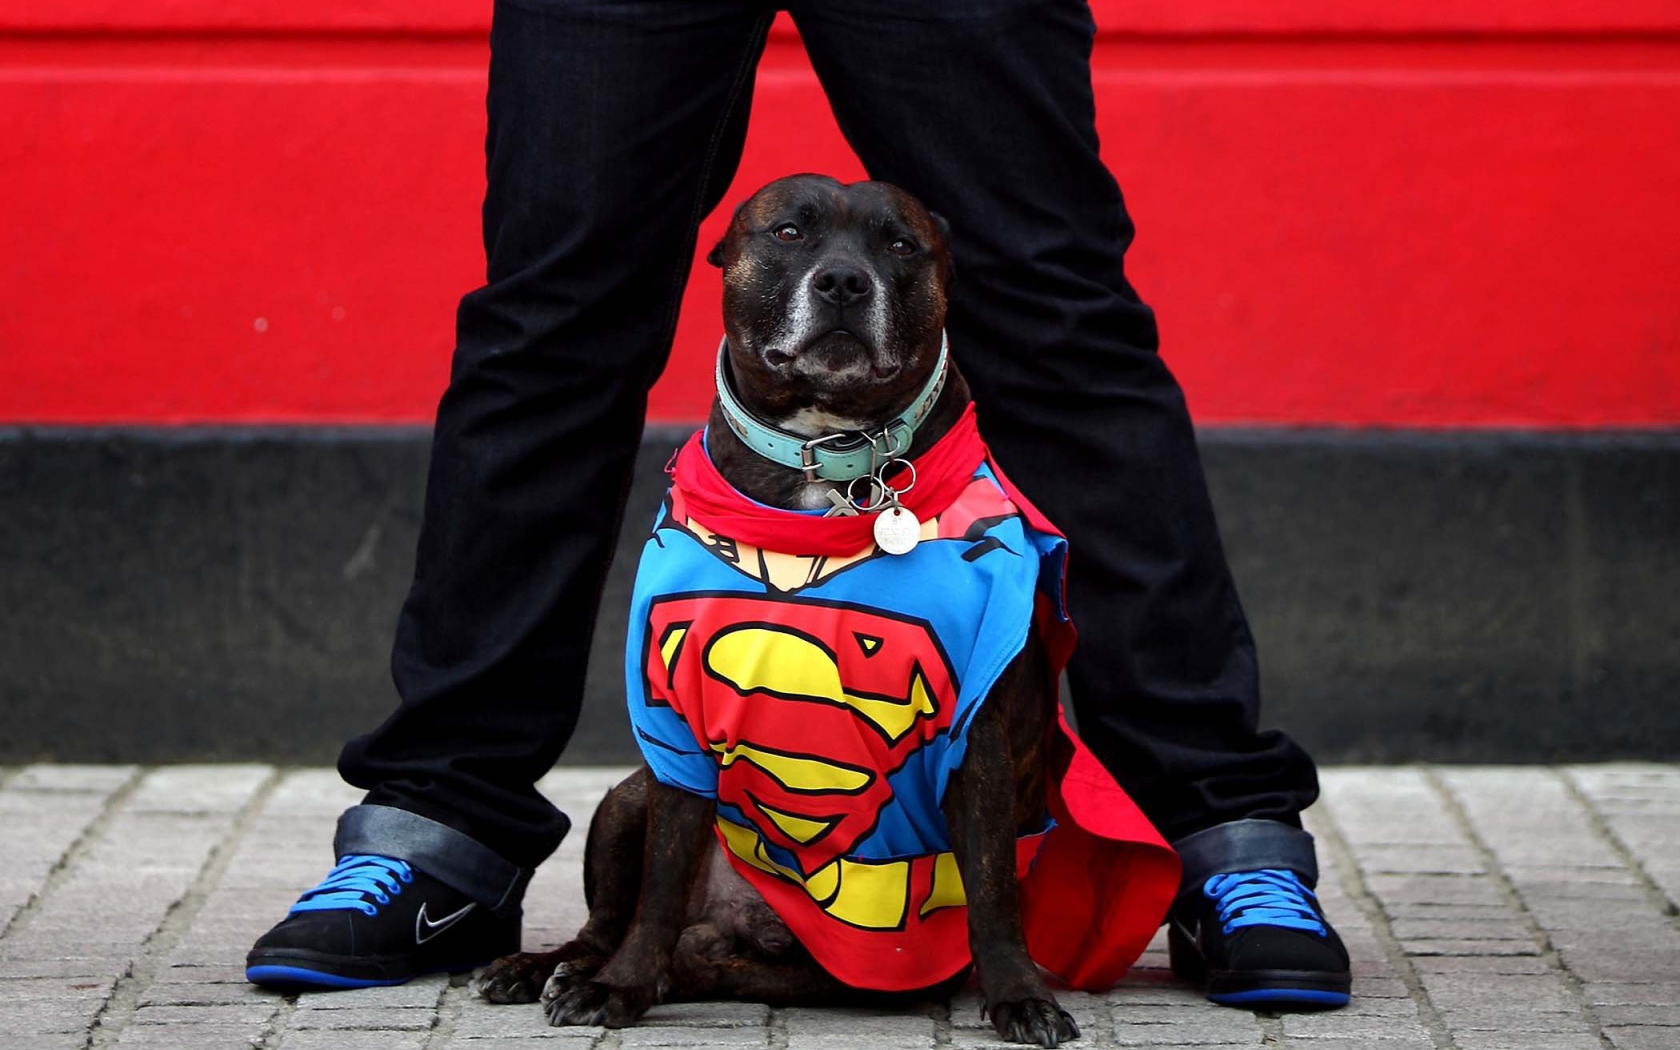 The Superman Staffordshire Bull Terrier